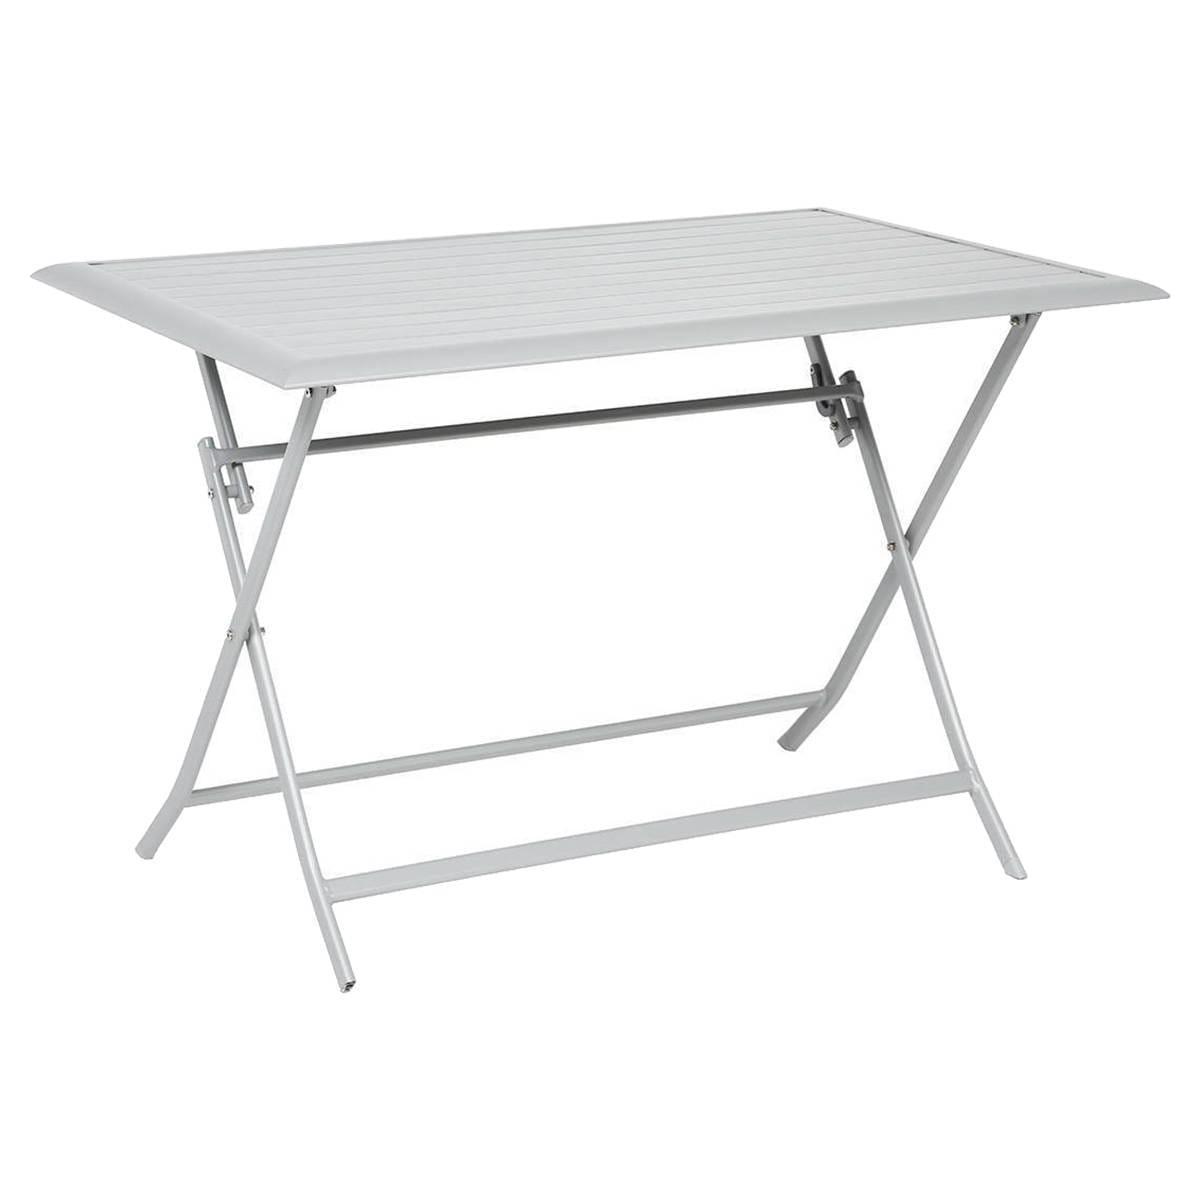 Table Azua pliante - 150 x 80 x H 71 cm - Gris silver - HESPERIDE